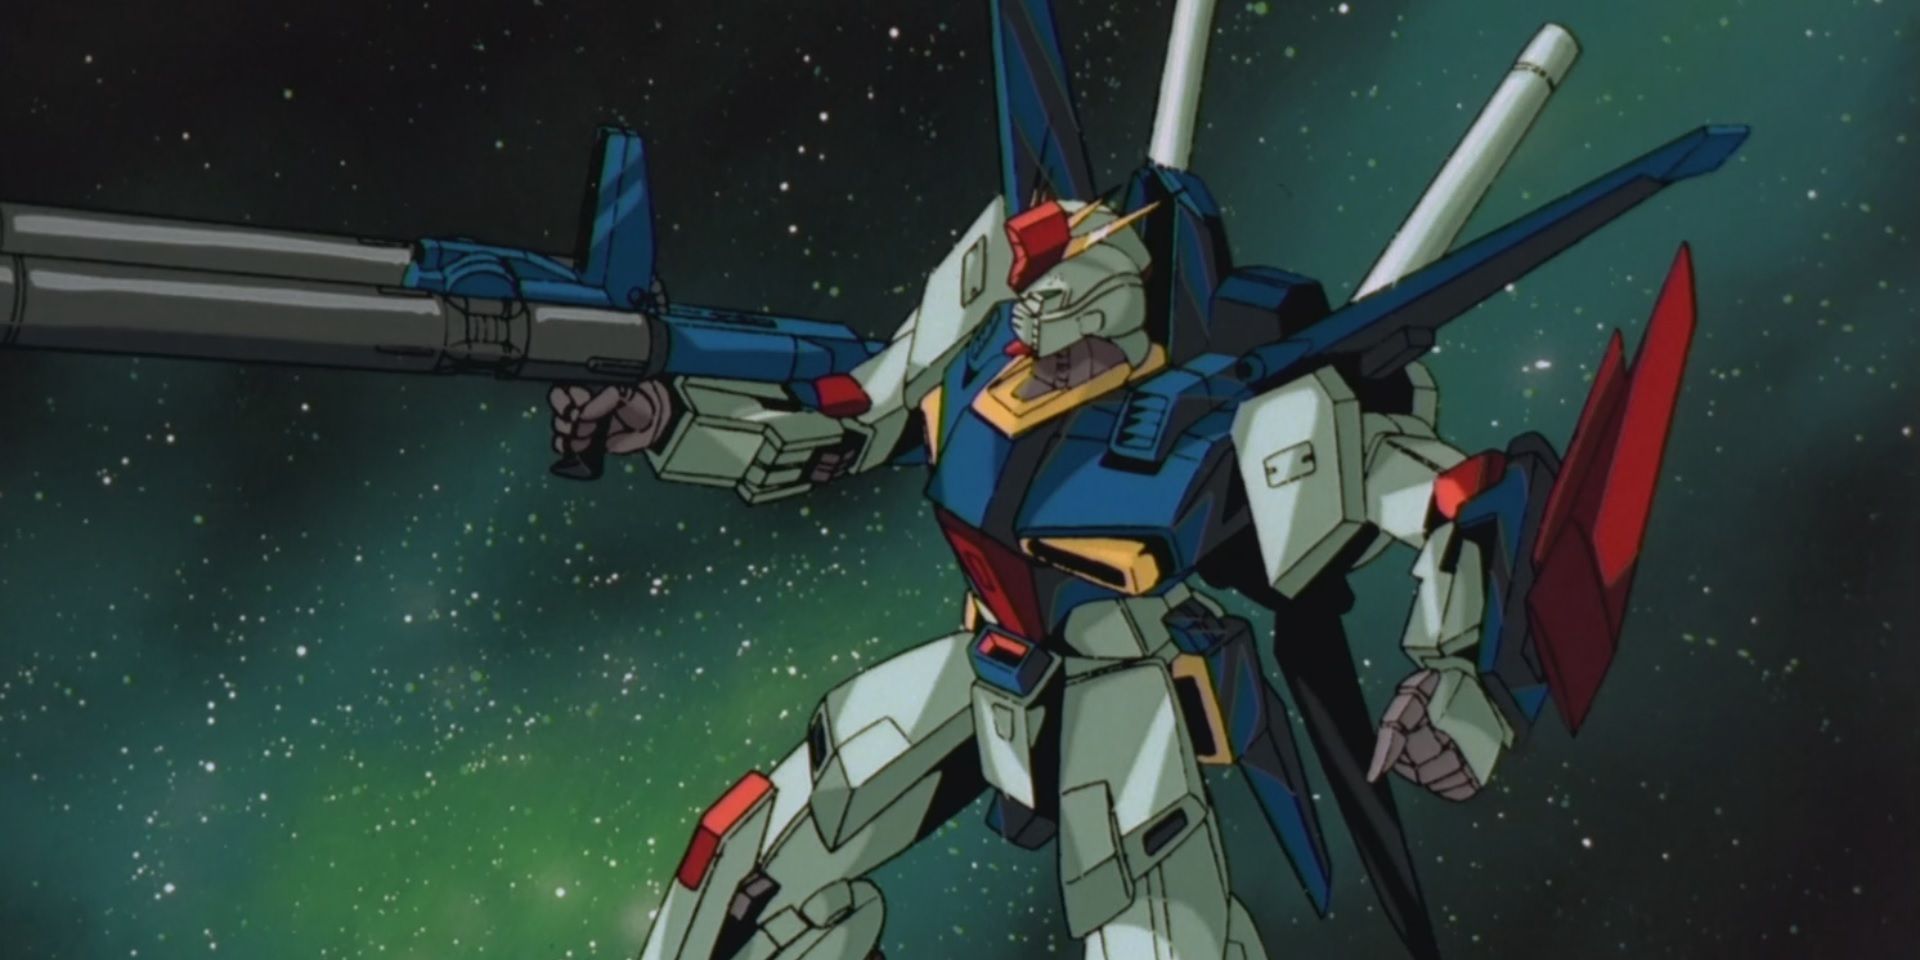 RX-78-2 Gundam from Mobile Suit Gundam.